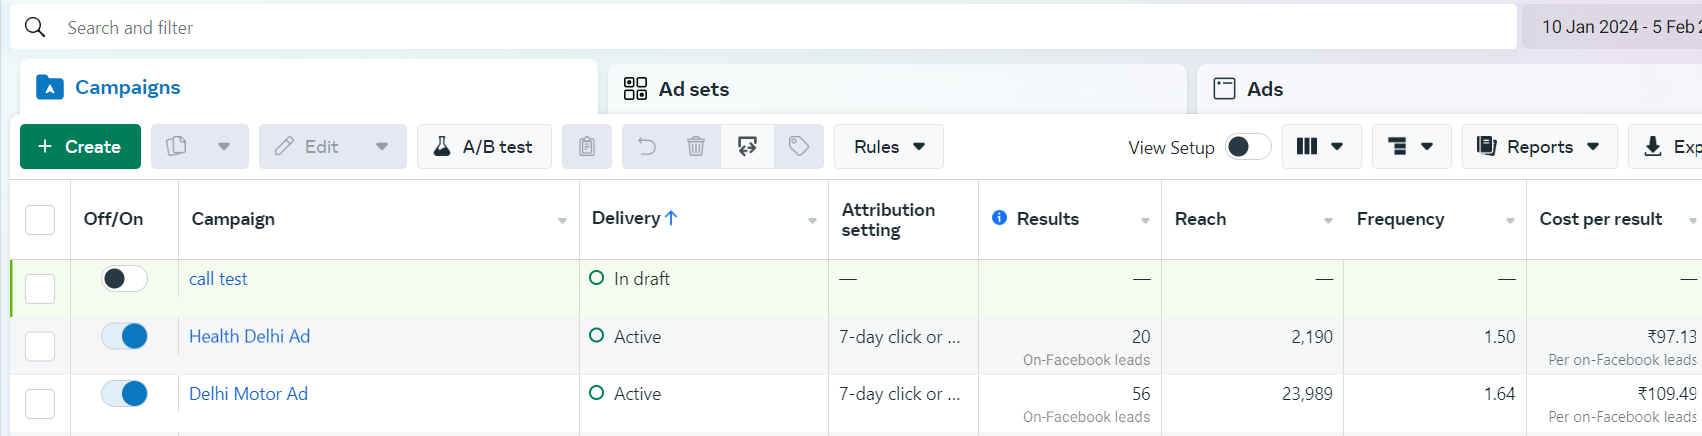 Facebook Ad Management Services results screenshot